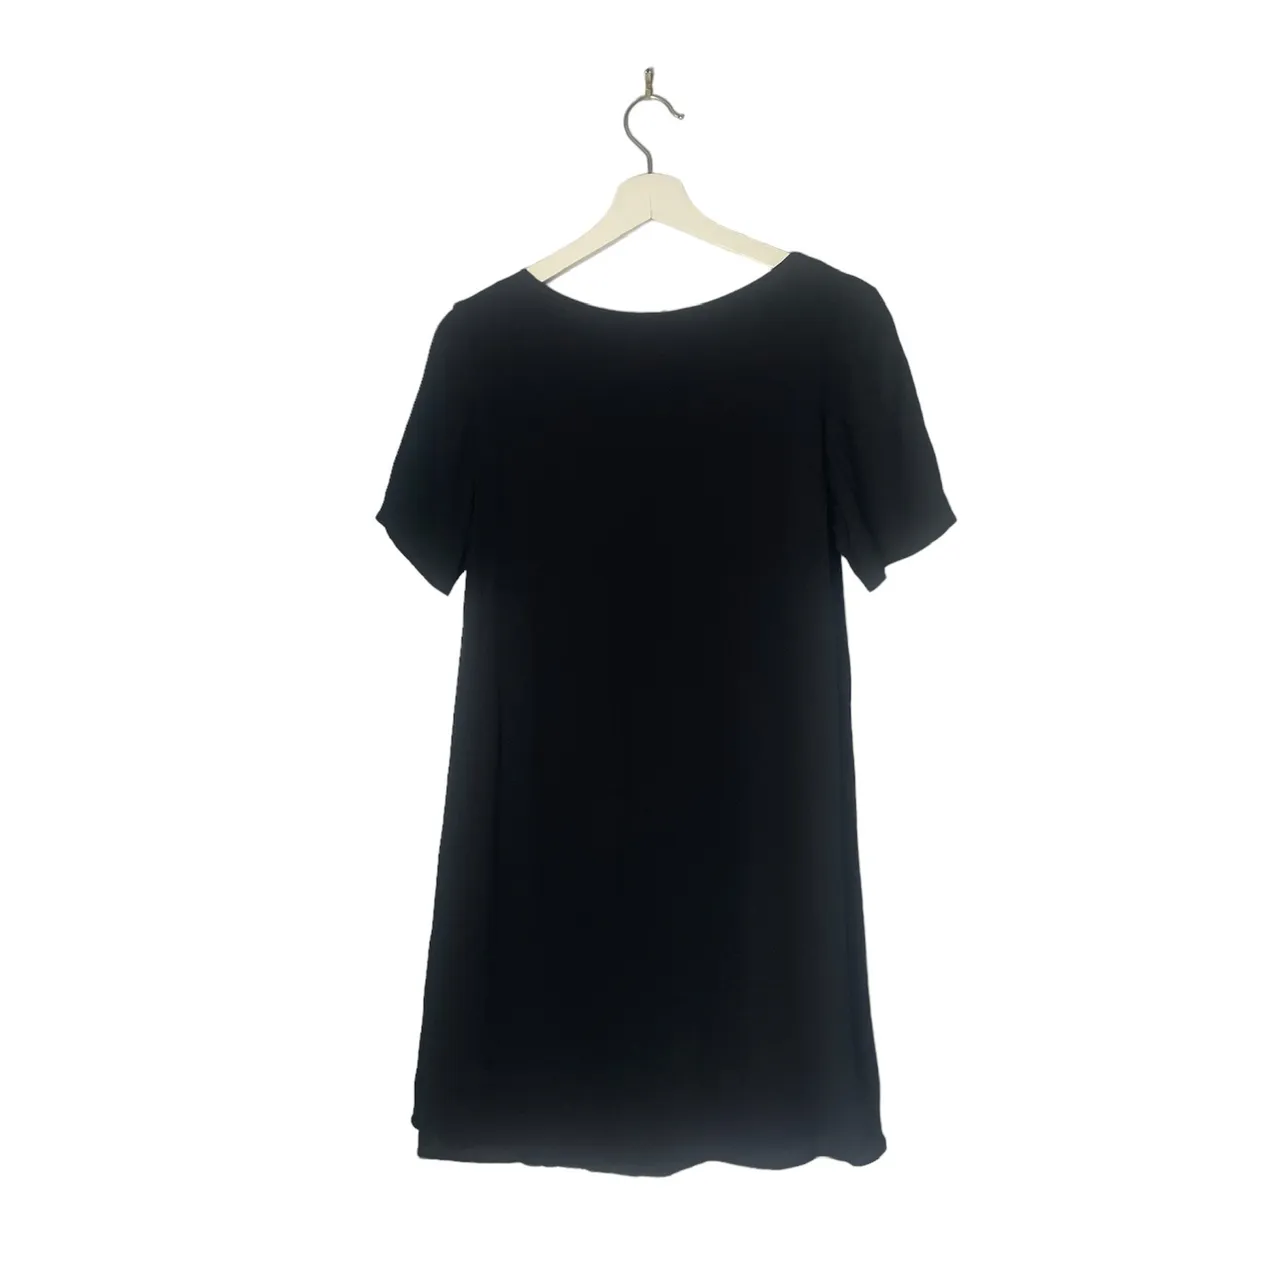 Aritzia Wilfred Free Black Teigen Flowy T-Shirt Dress Size Small photo 4